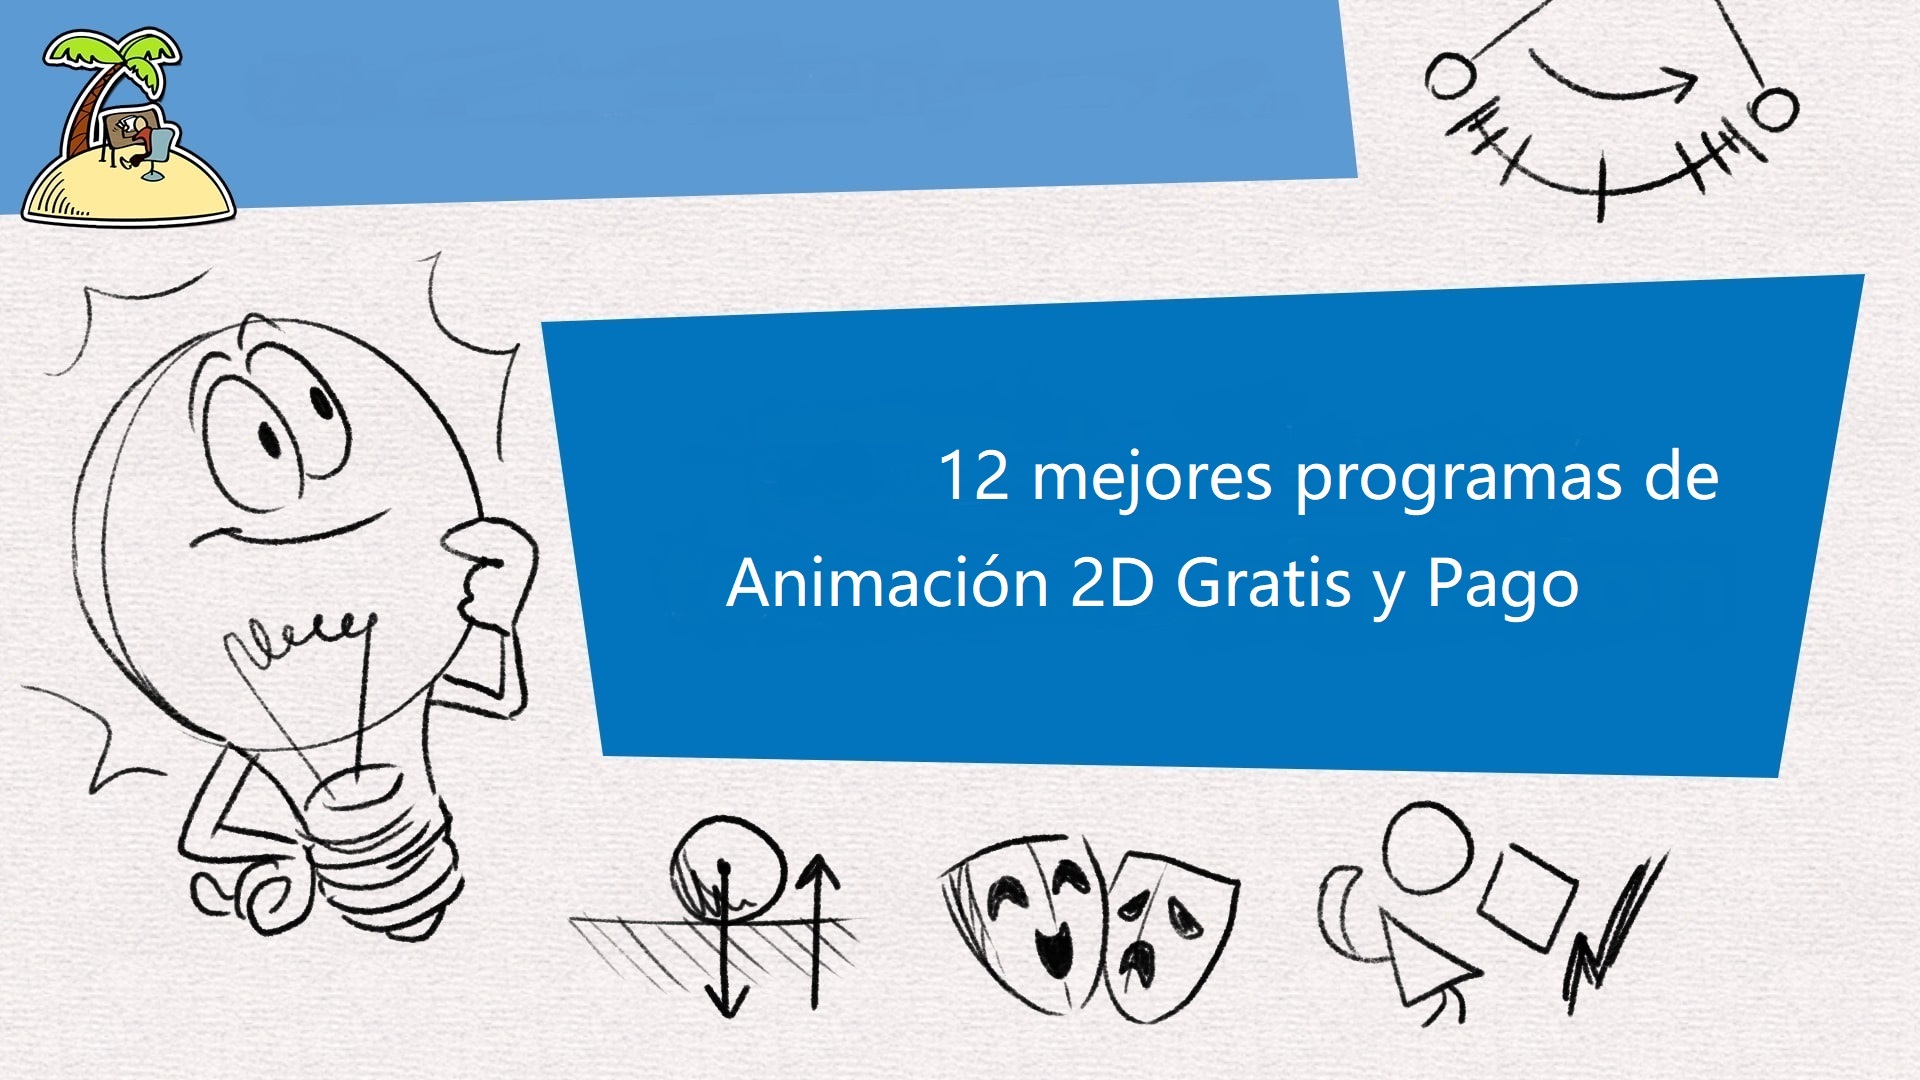 12 mejores programas de Animacion 2D.jpg